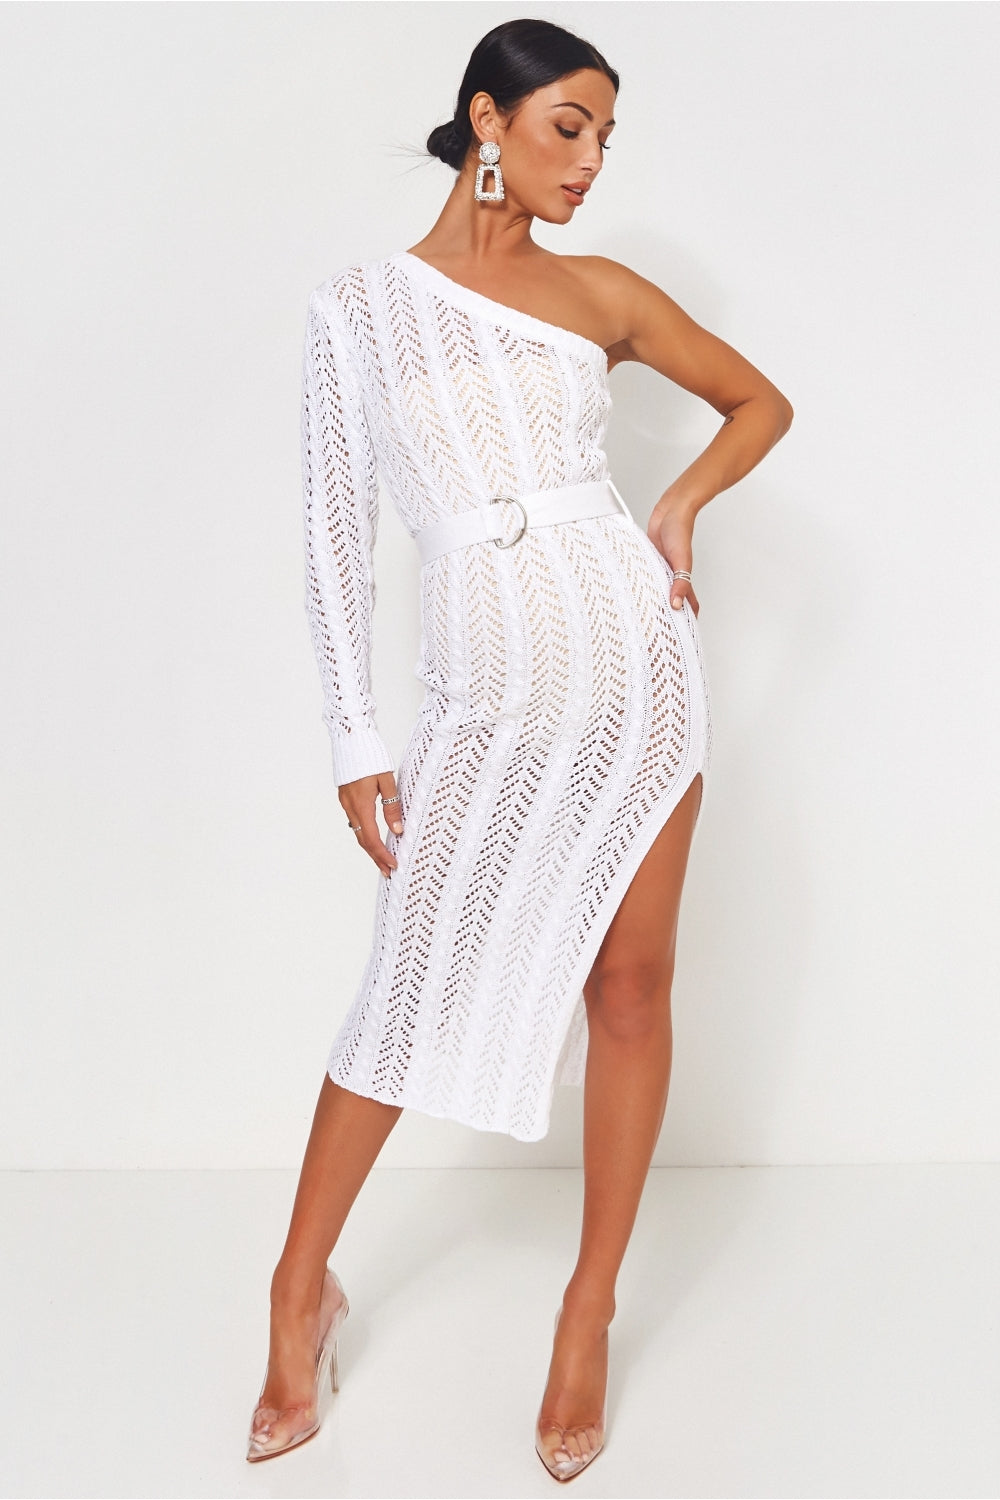 Cici White Crochet Bodycon Dress